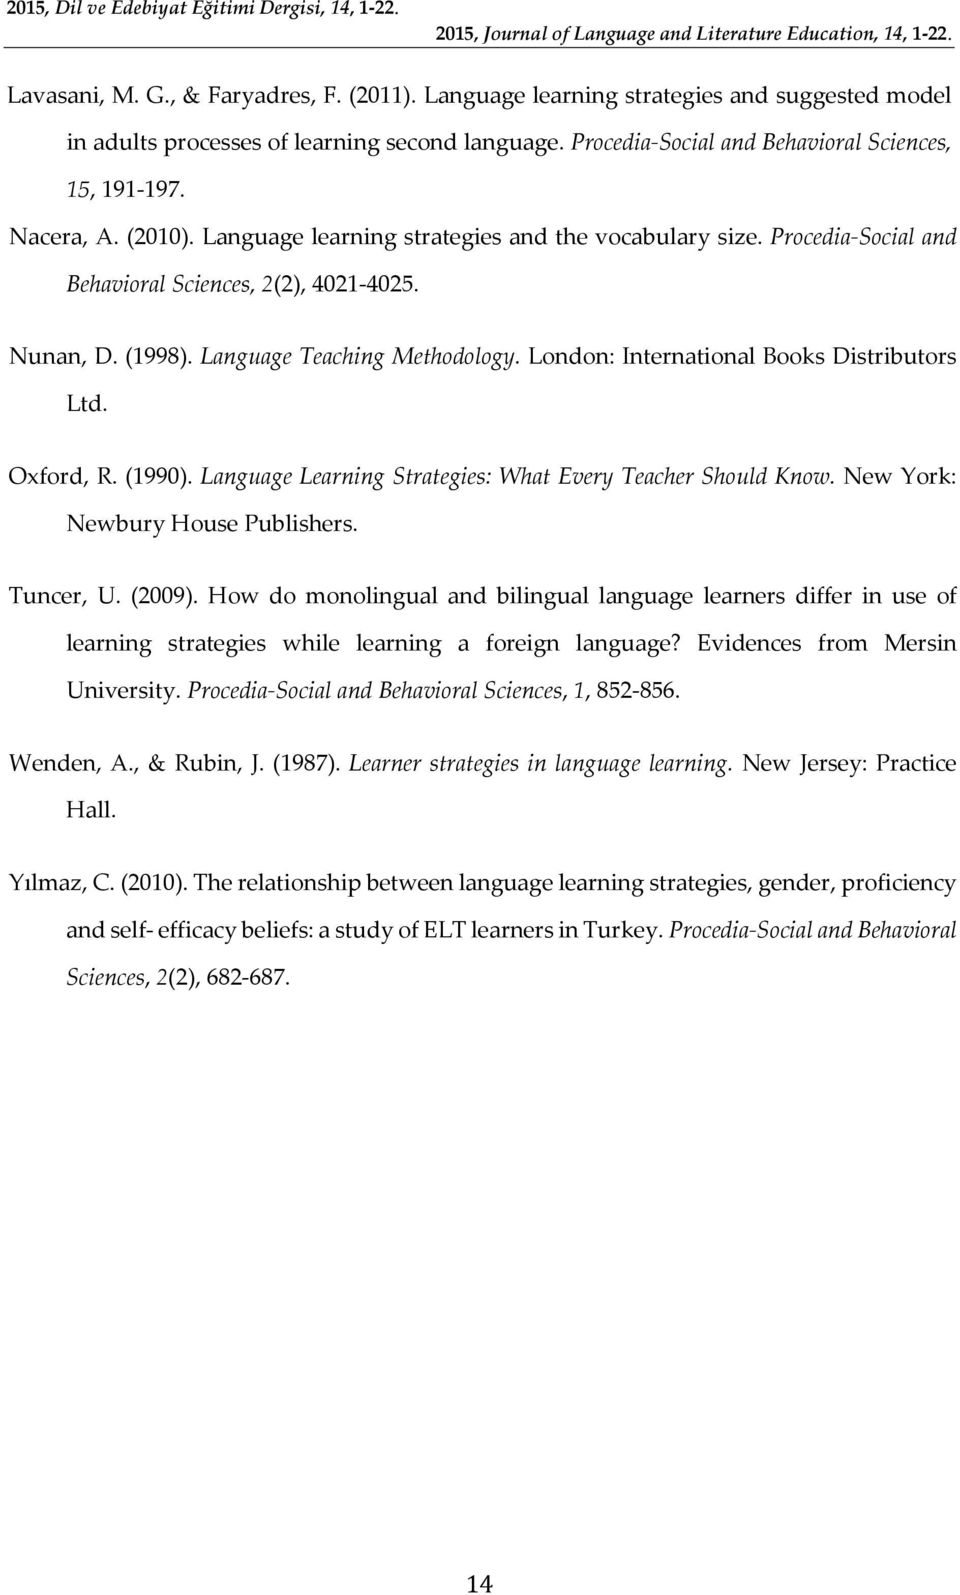 London: International Books Distributors Ltd. Oxford, R. (1990). Language Learning Strategies: What Every Teacher Should Know. New York: Newbury House Publishers. Tuncer, U. (2009).